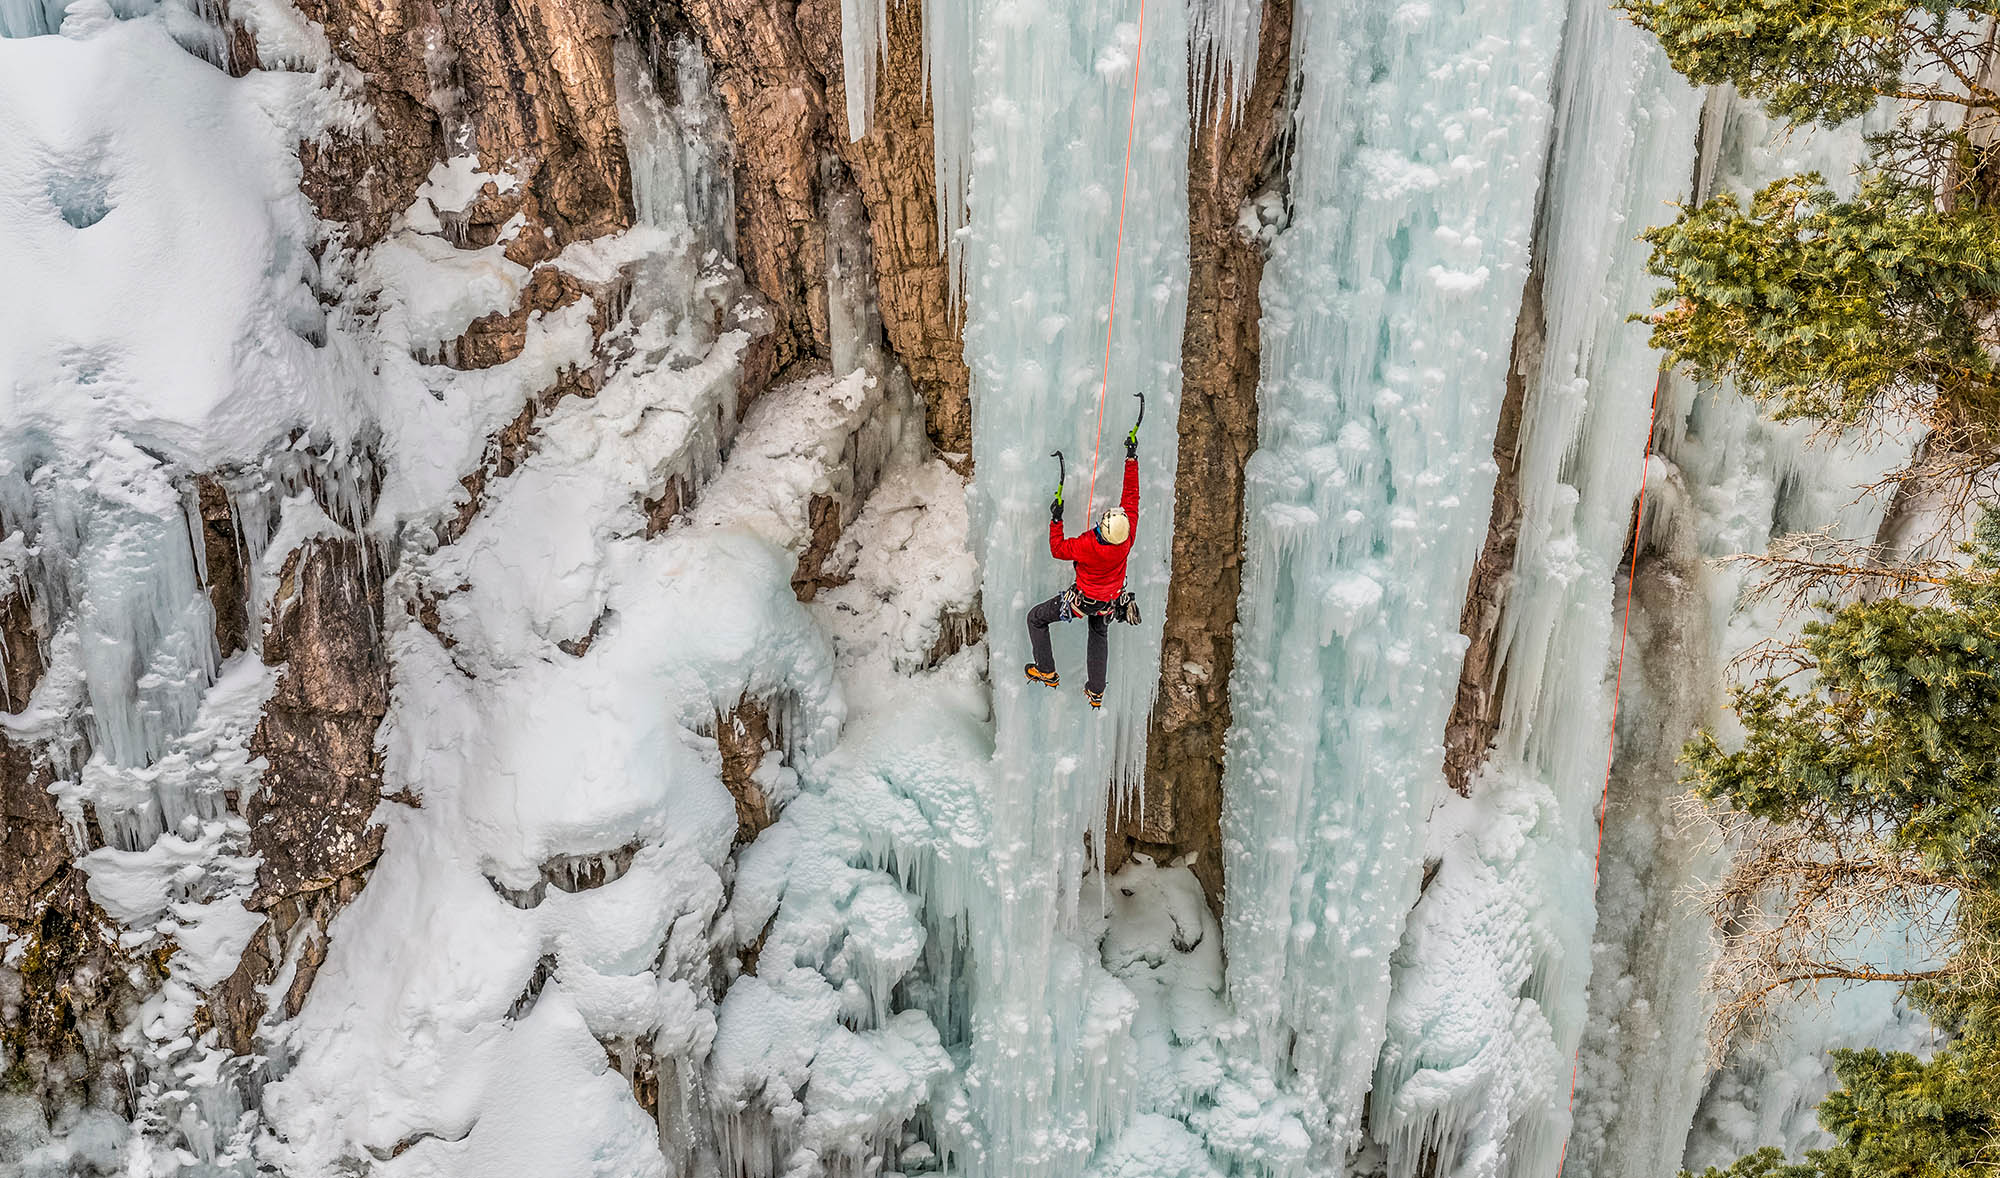 Ice climber ascending